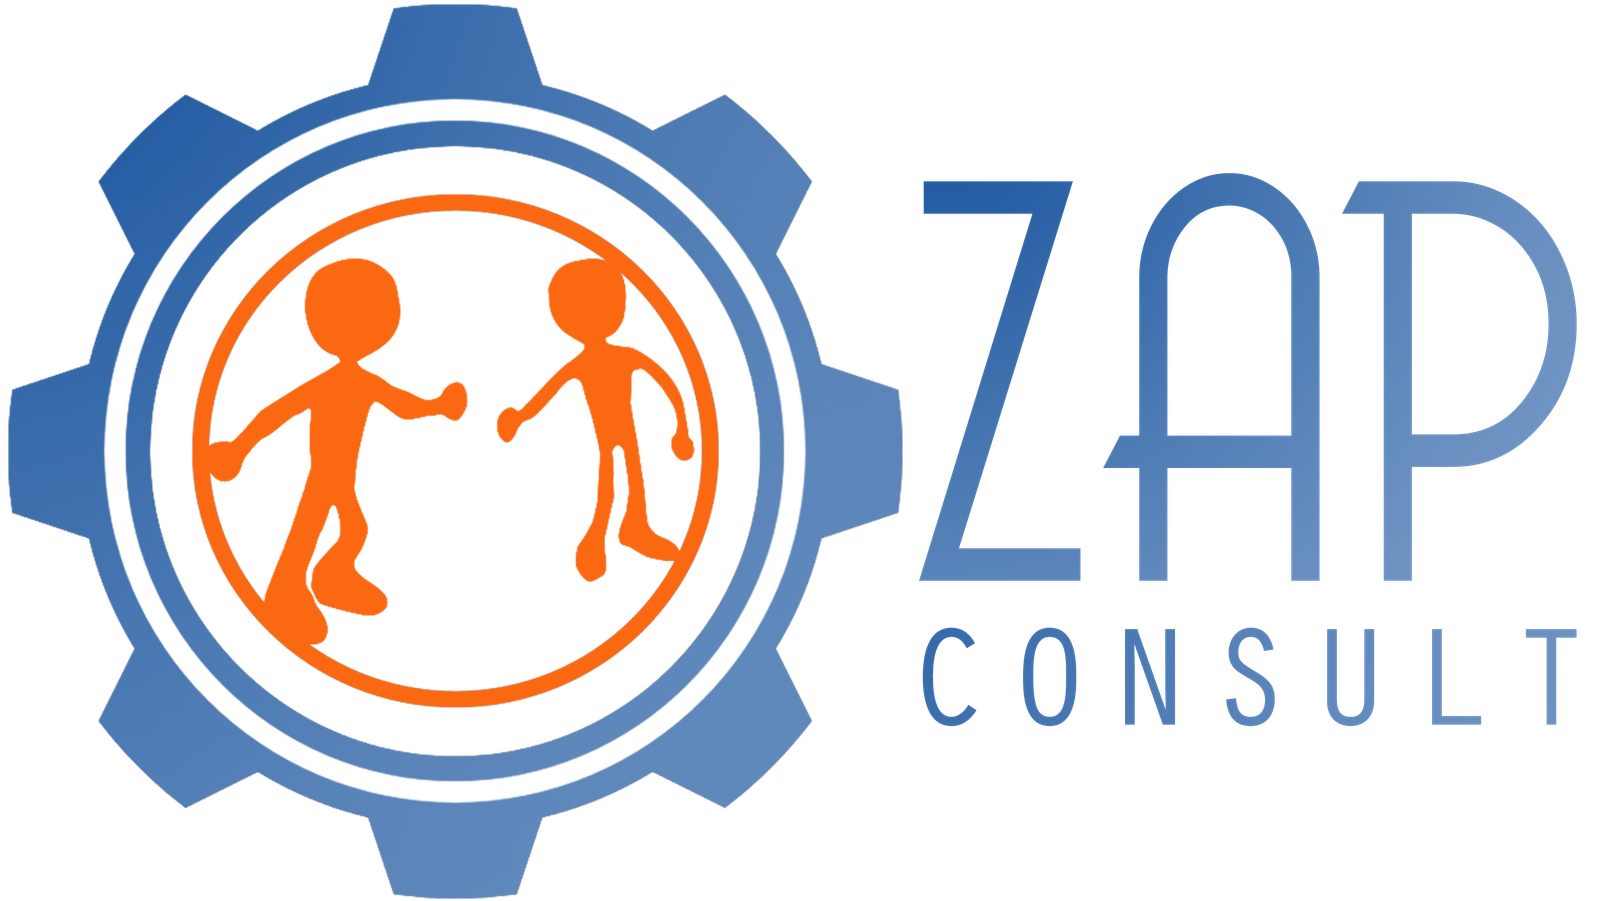 Zap Consult